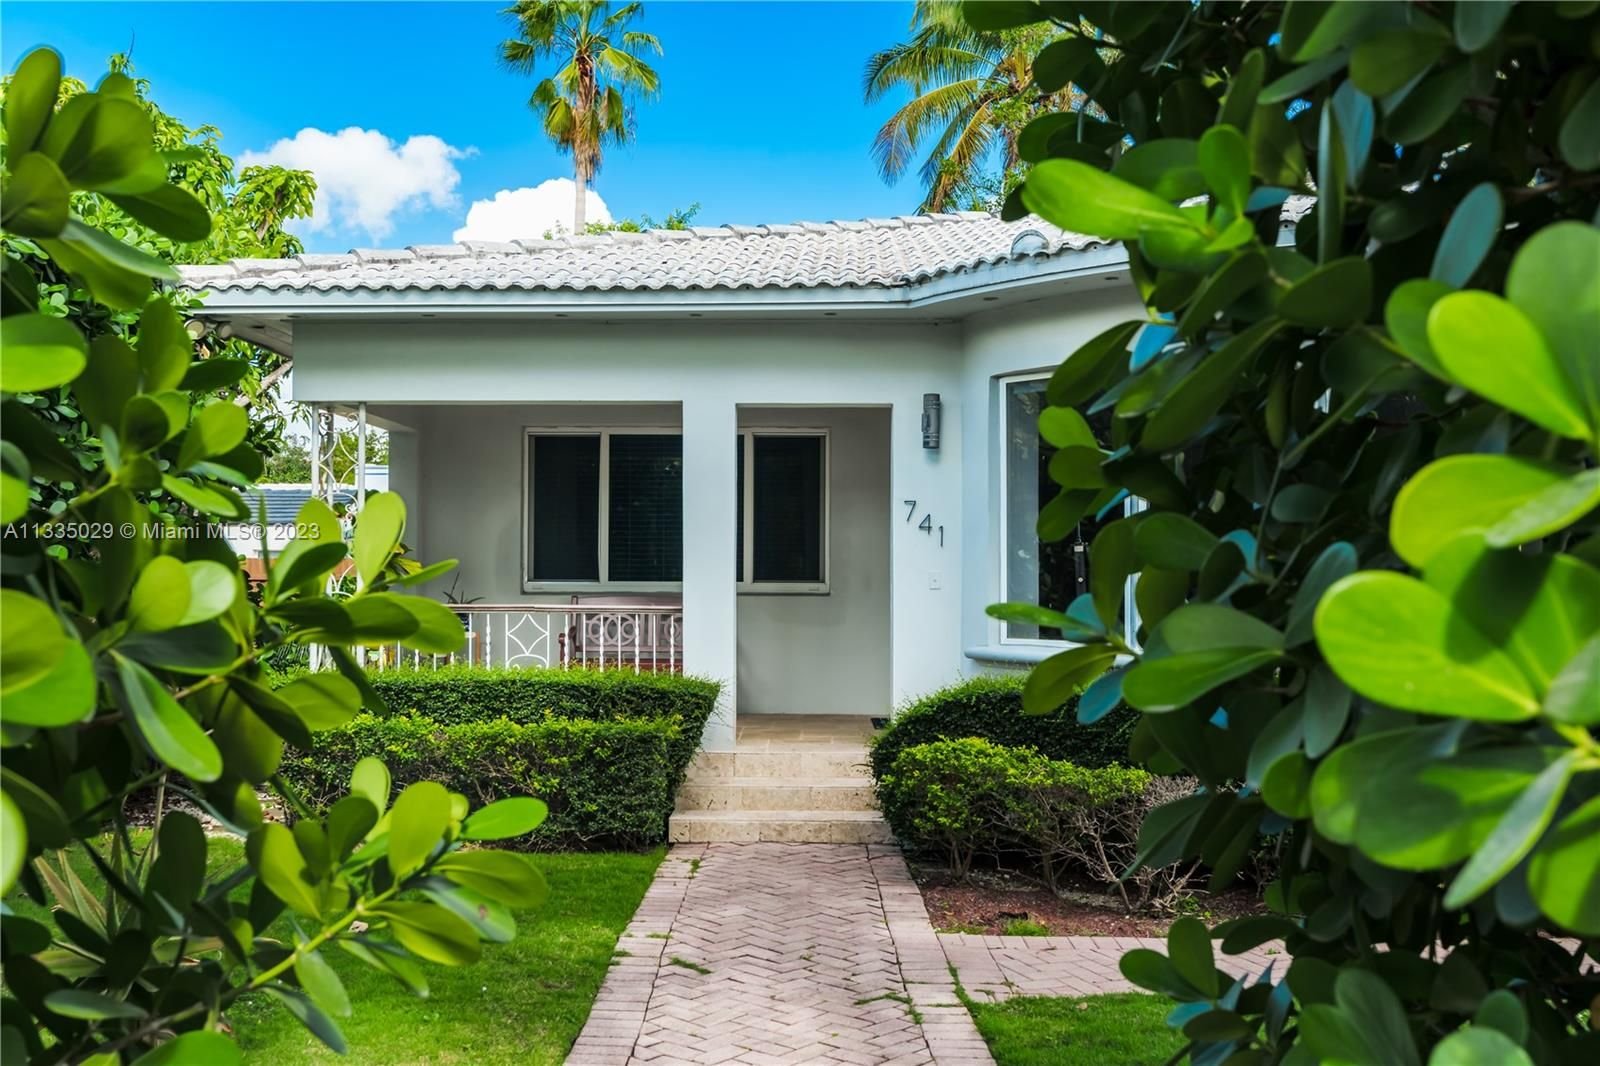 Real estate property located at 741 87th St, Miami-Dade County, Miami, FL